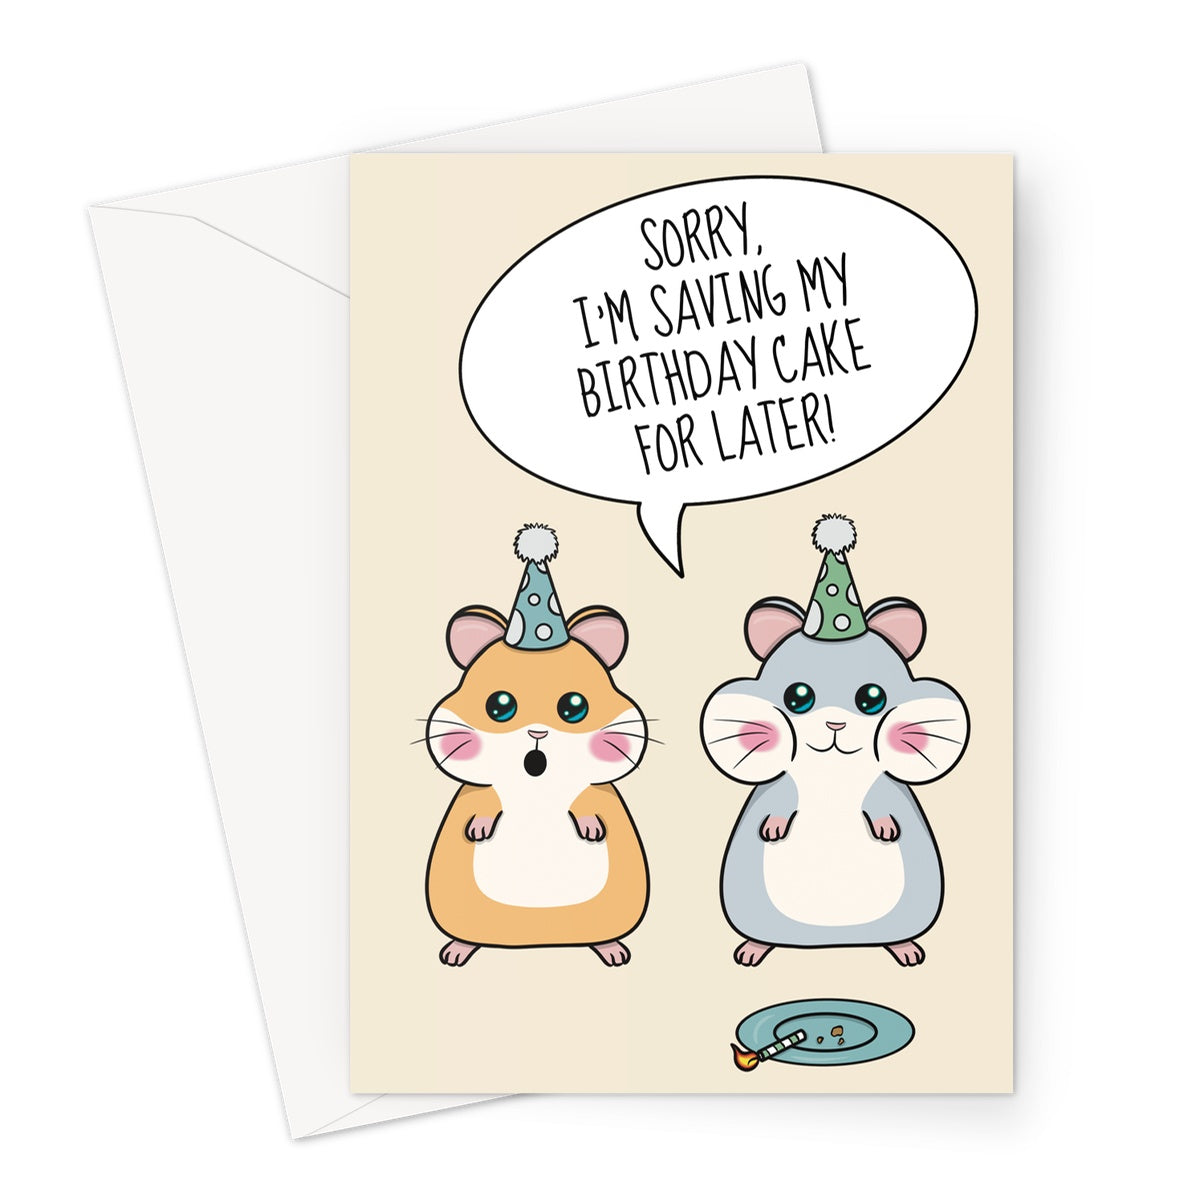 A cute Hamster birthday cake joke greeting card.